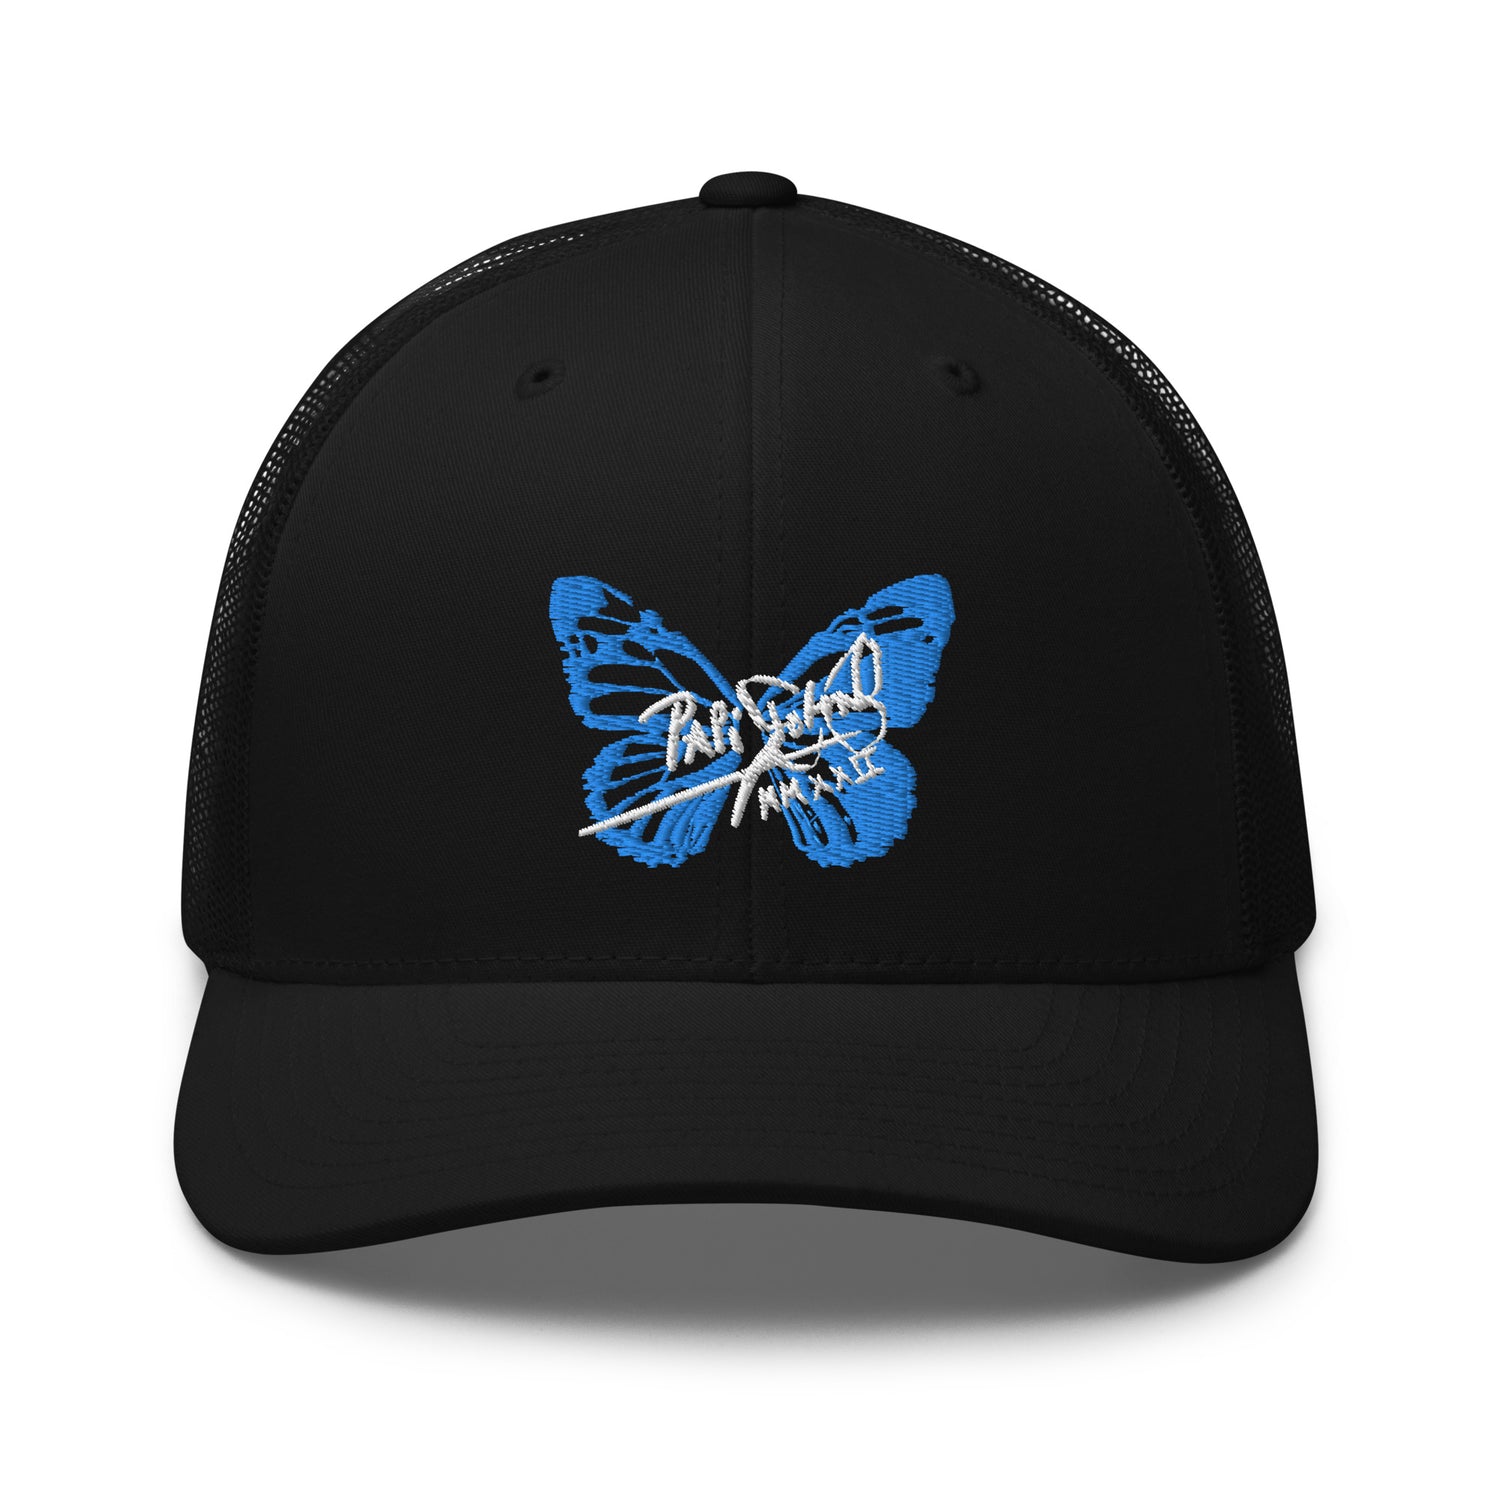 Gorra Trucker retro negra con bordado de mariposa azul firma papijohn